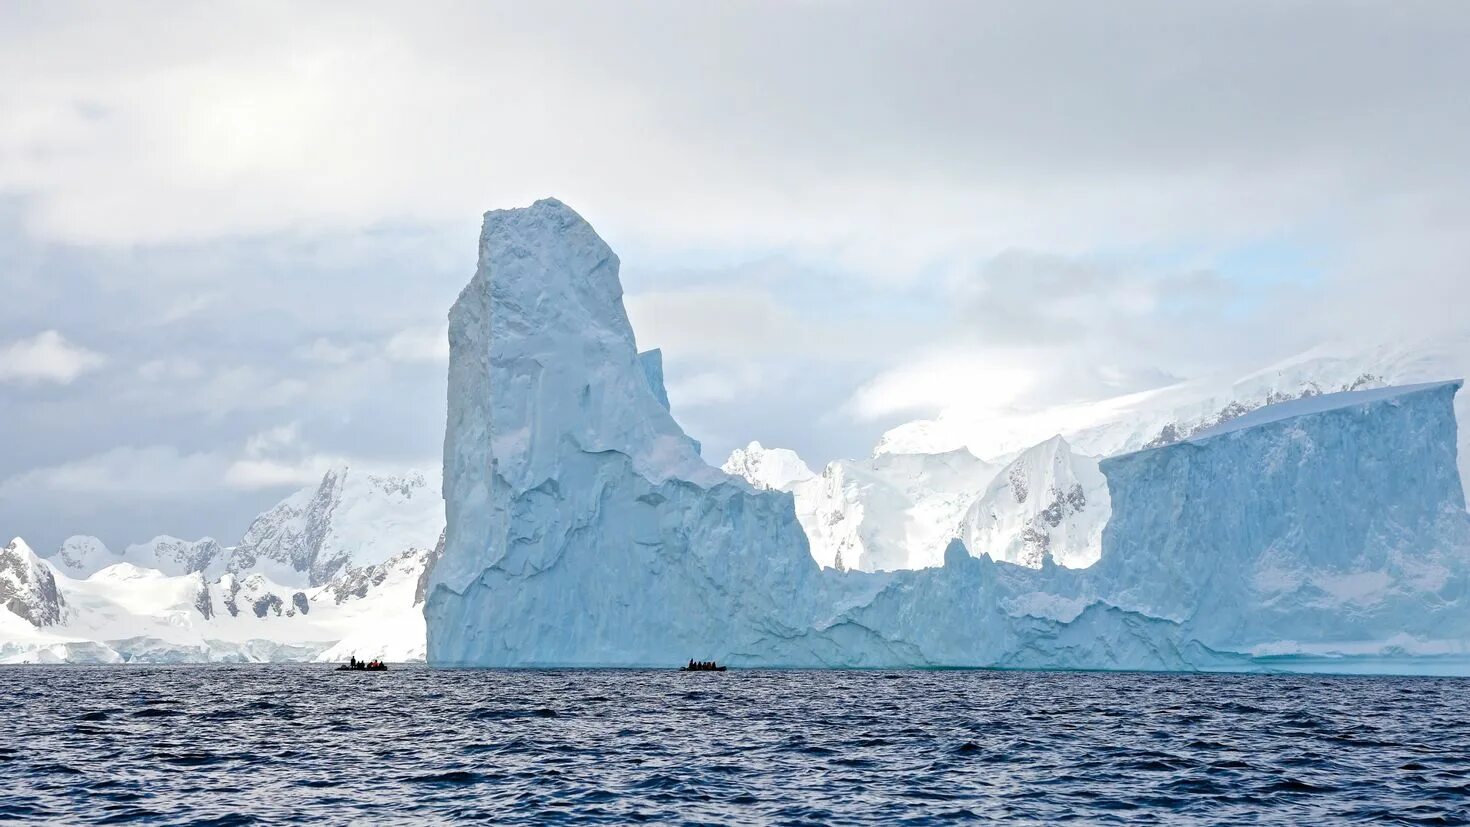 Ледник академии наук. Iceberg. Ледовитый океан Айсберг. Оледенение на Северном Ледовитом океане. Мыс горн айсберги.